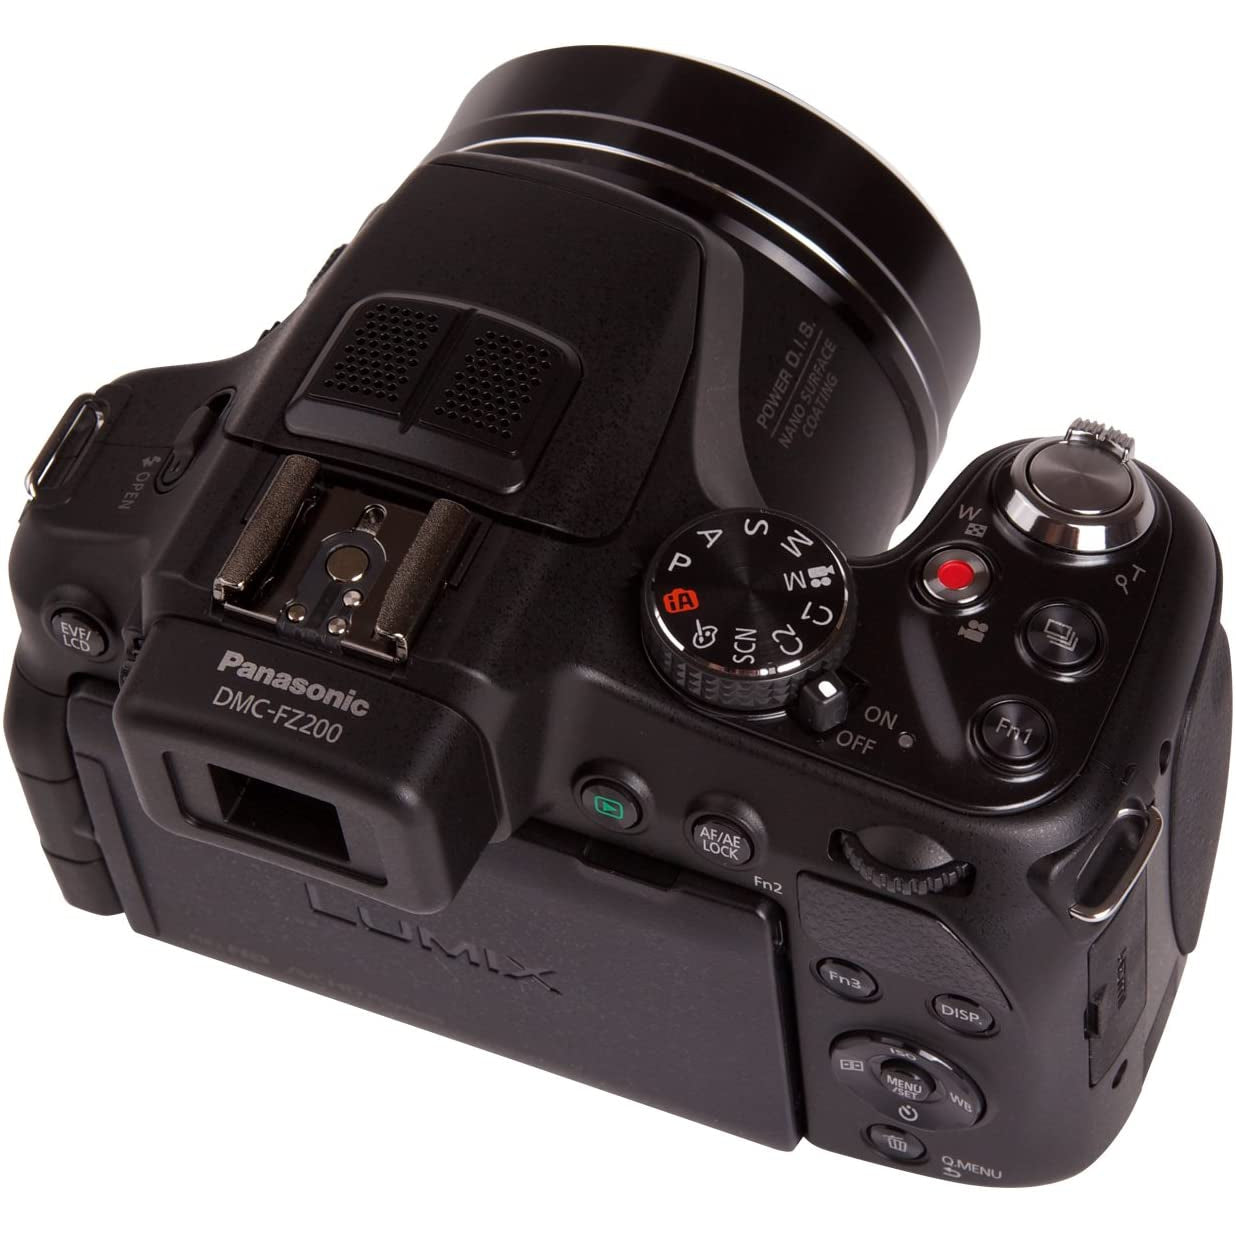 Panasonic Lumix DMC-FZ200 Digital Bridge Camera - Black